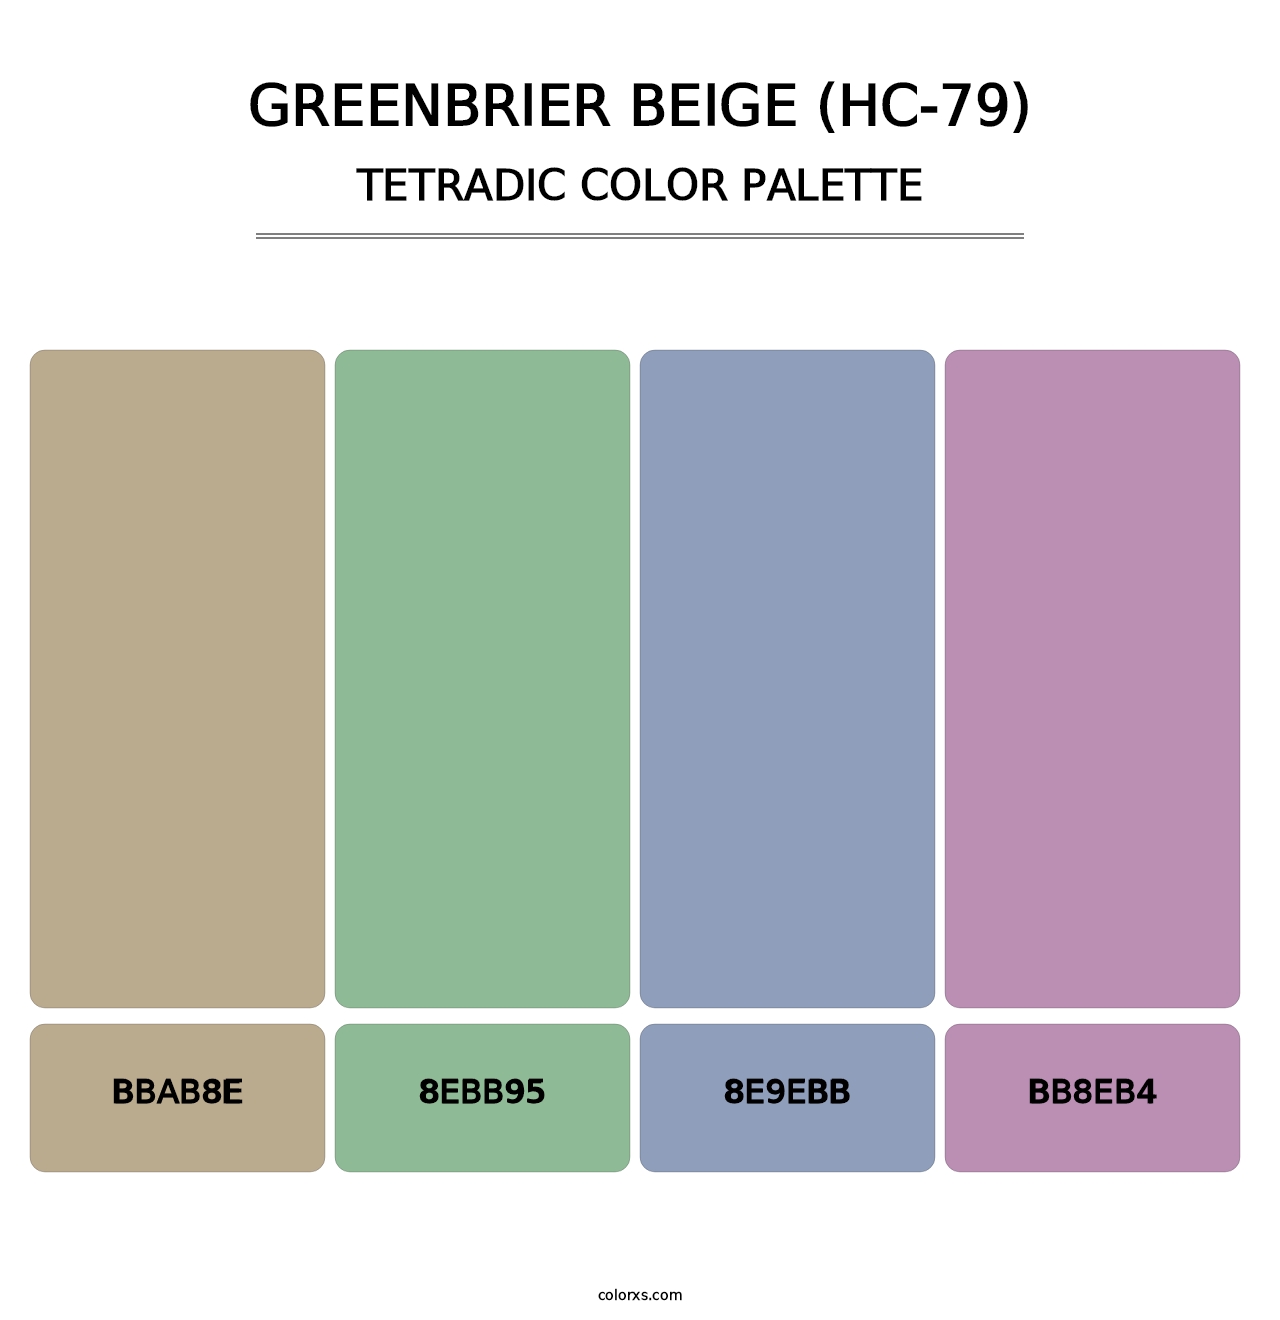 Greenbrier Beige (HC-79) - Tetradic Color Palette